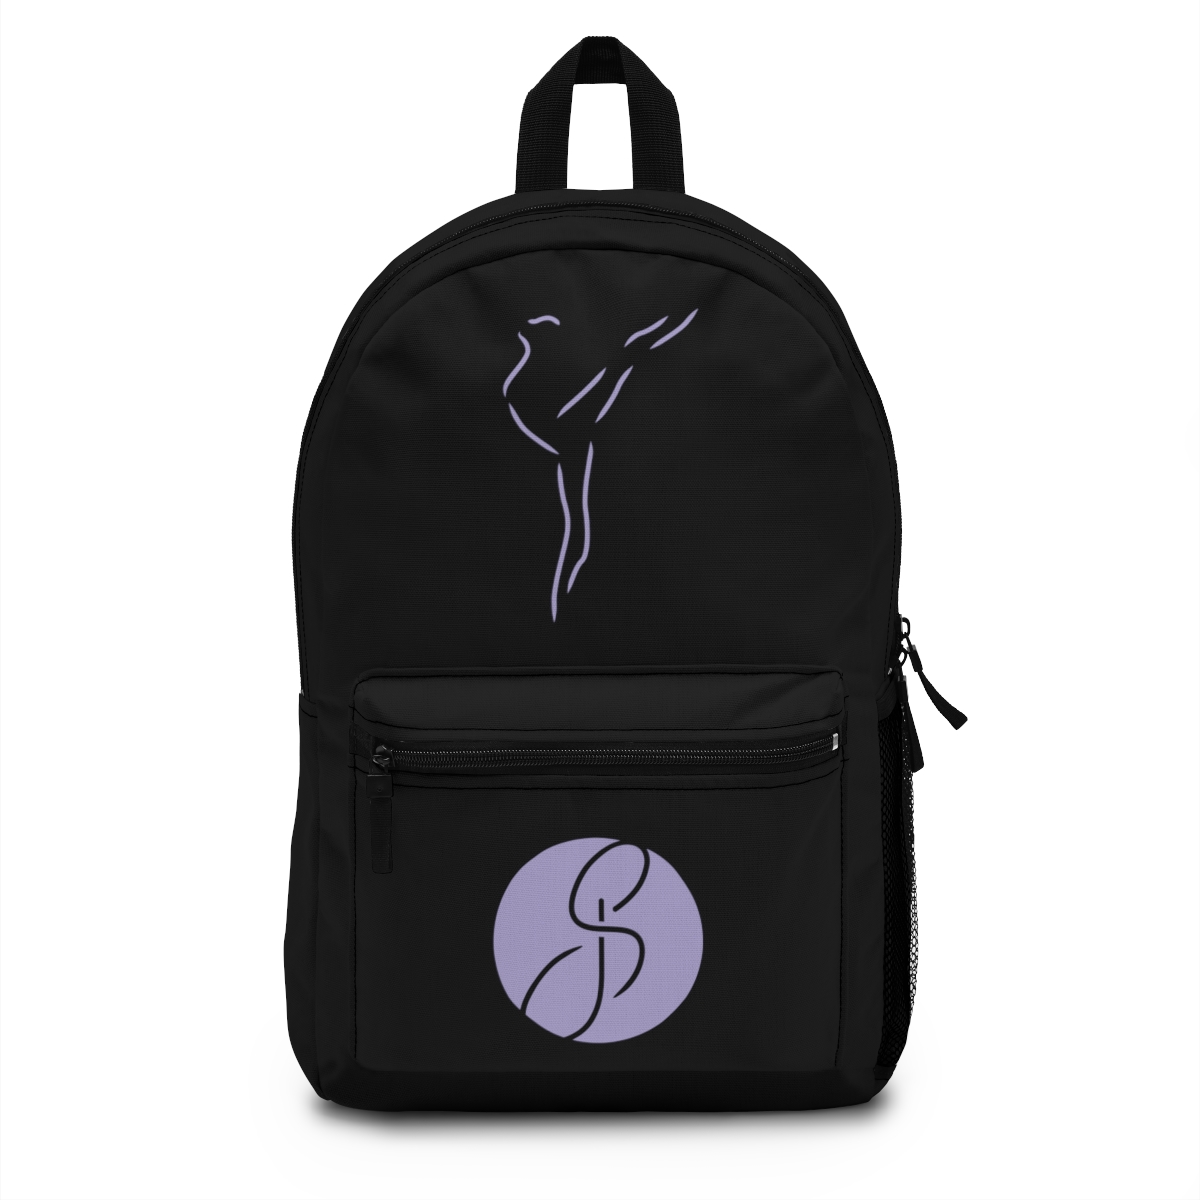 SJDT Backpack product main image